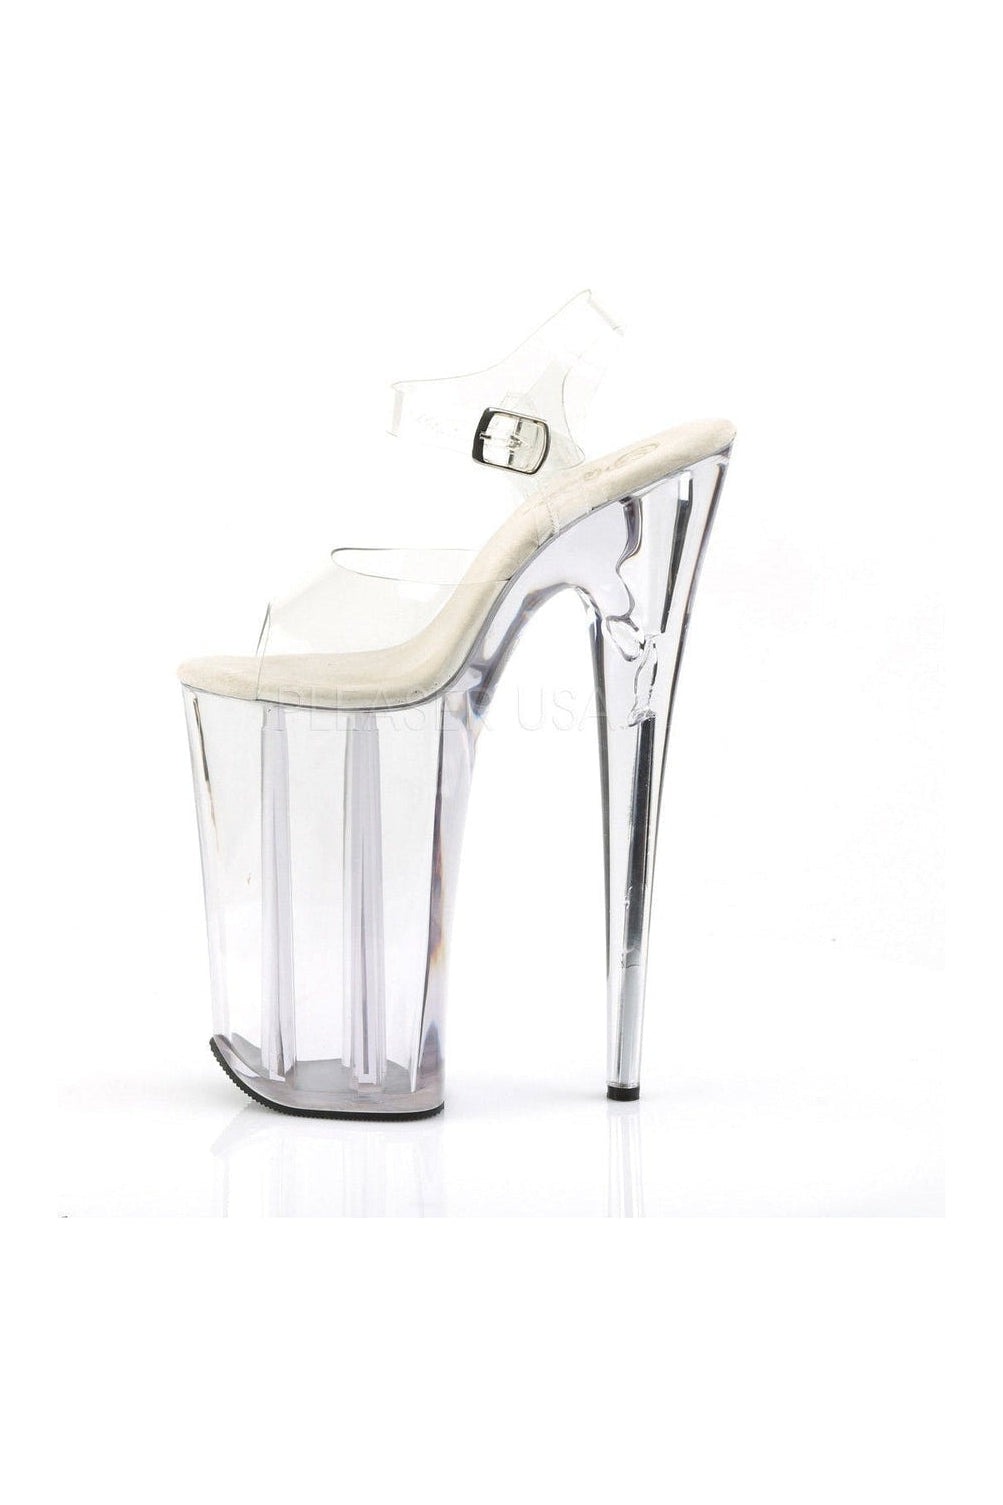 BEYOND-008 Platform Sandal | Clear Vinyl-Sandals- Stripper Shoes at SEXYSHOES.COM